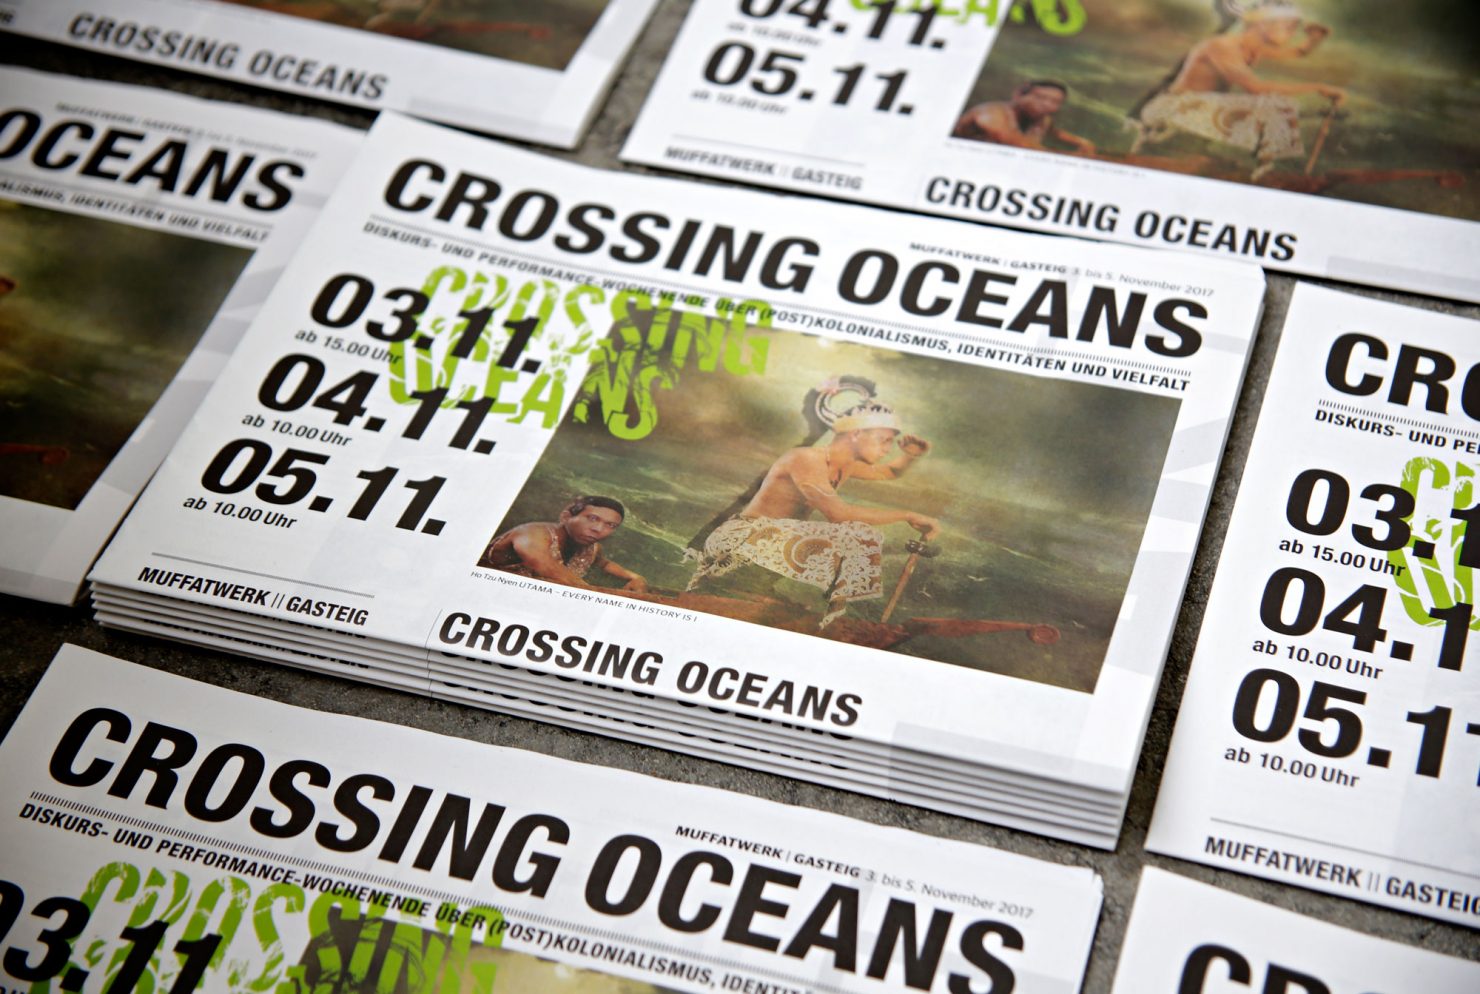 Titel Programmzeitung Sonderprogramm "Crossing Oceans" spielart 2017 theaterfestival München